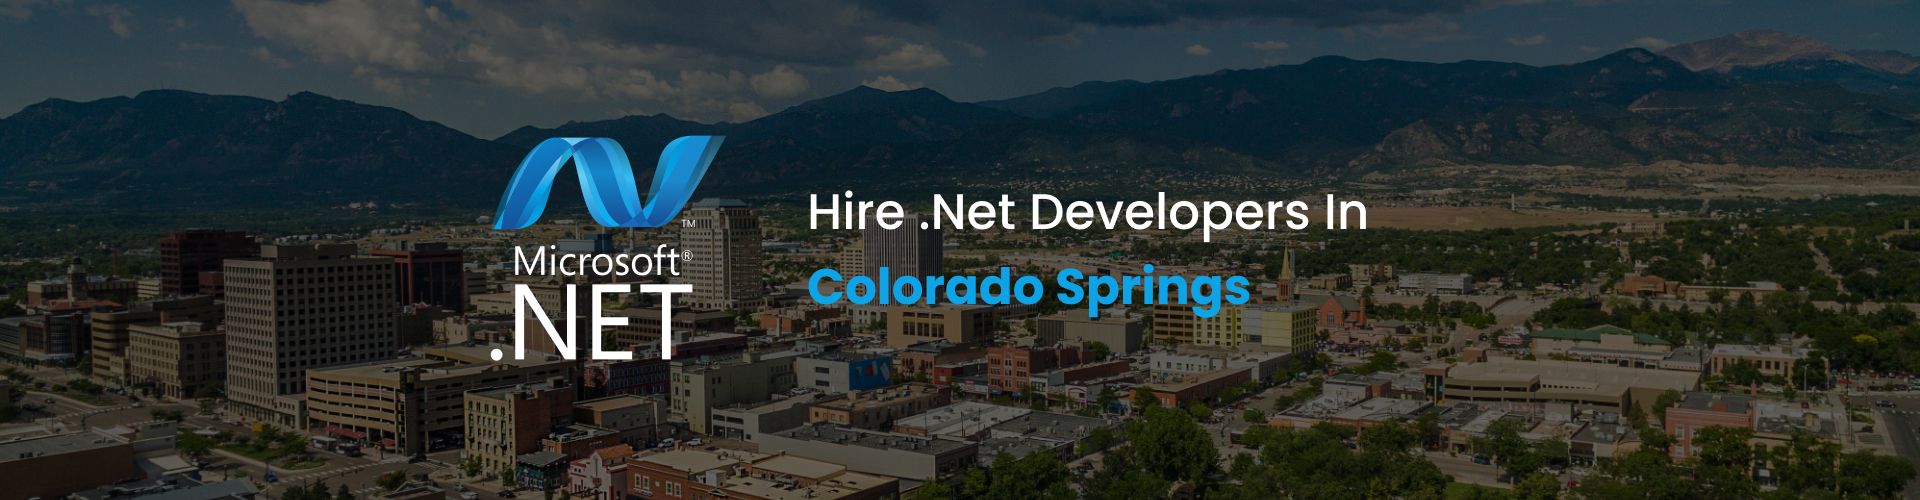 hire .net developers in colorado springs